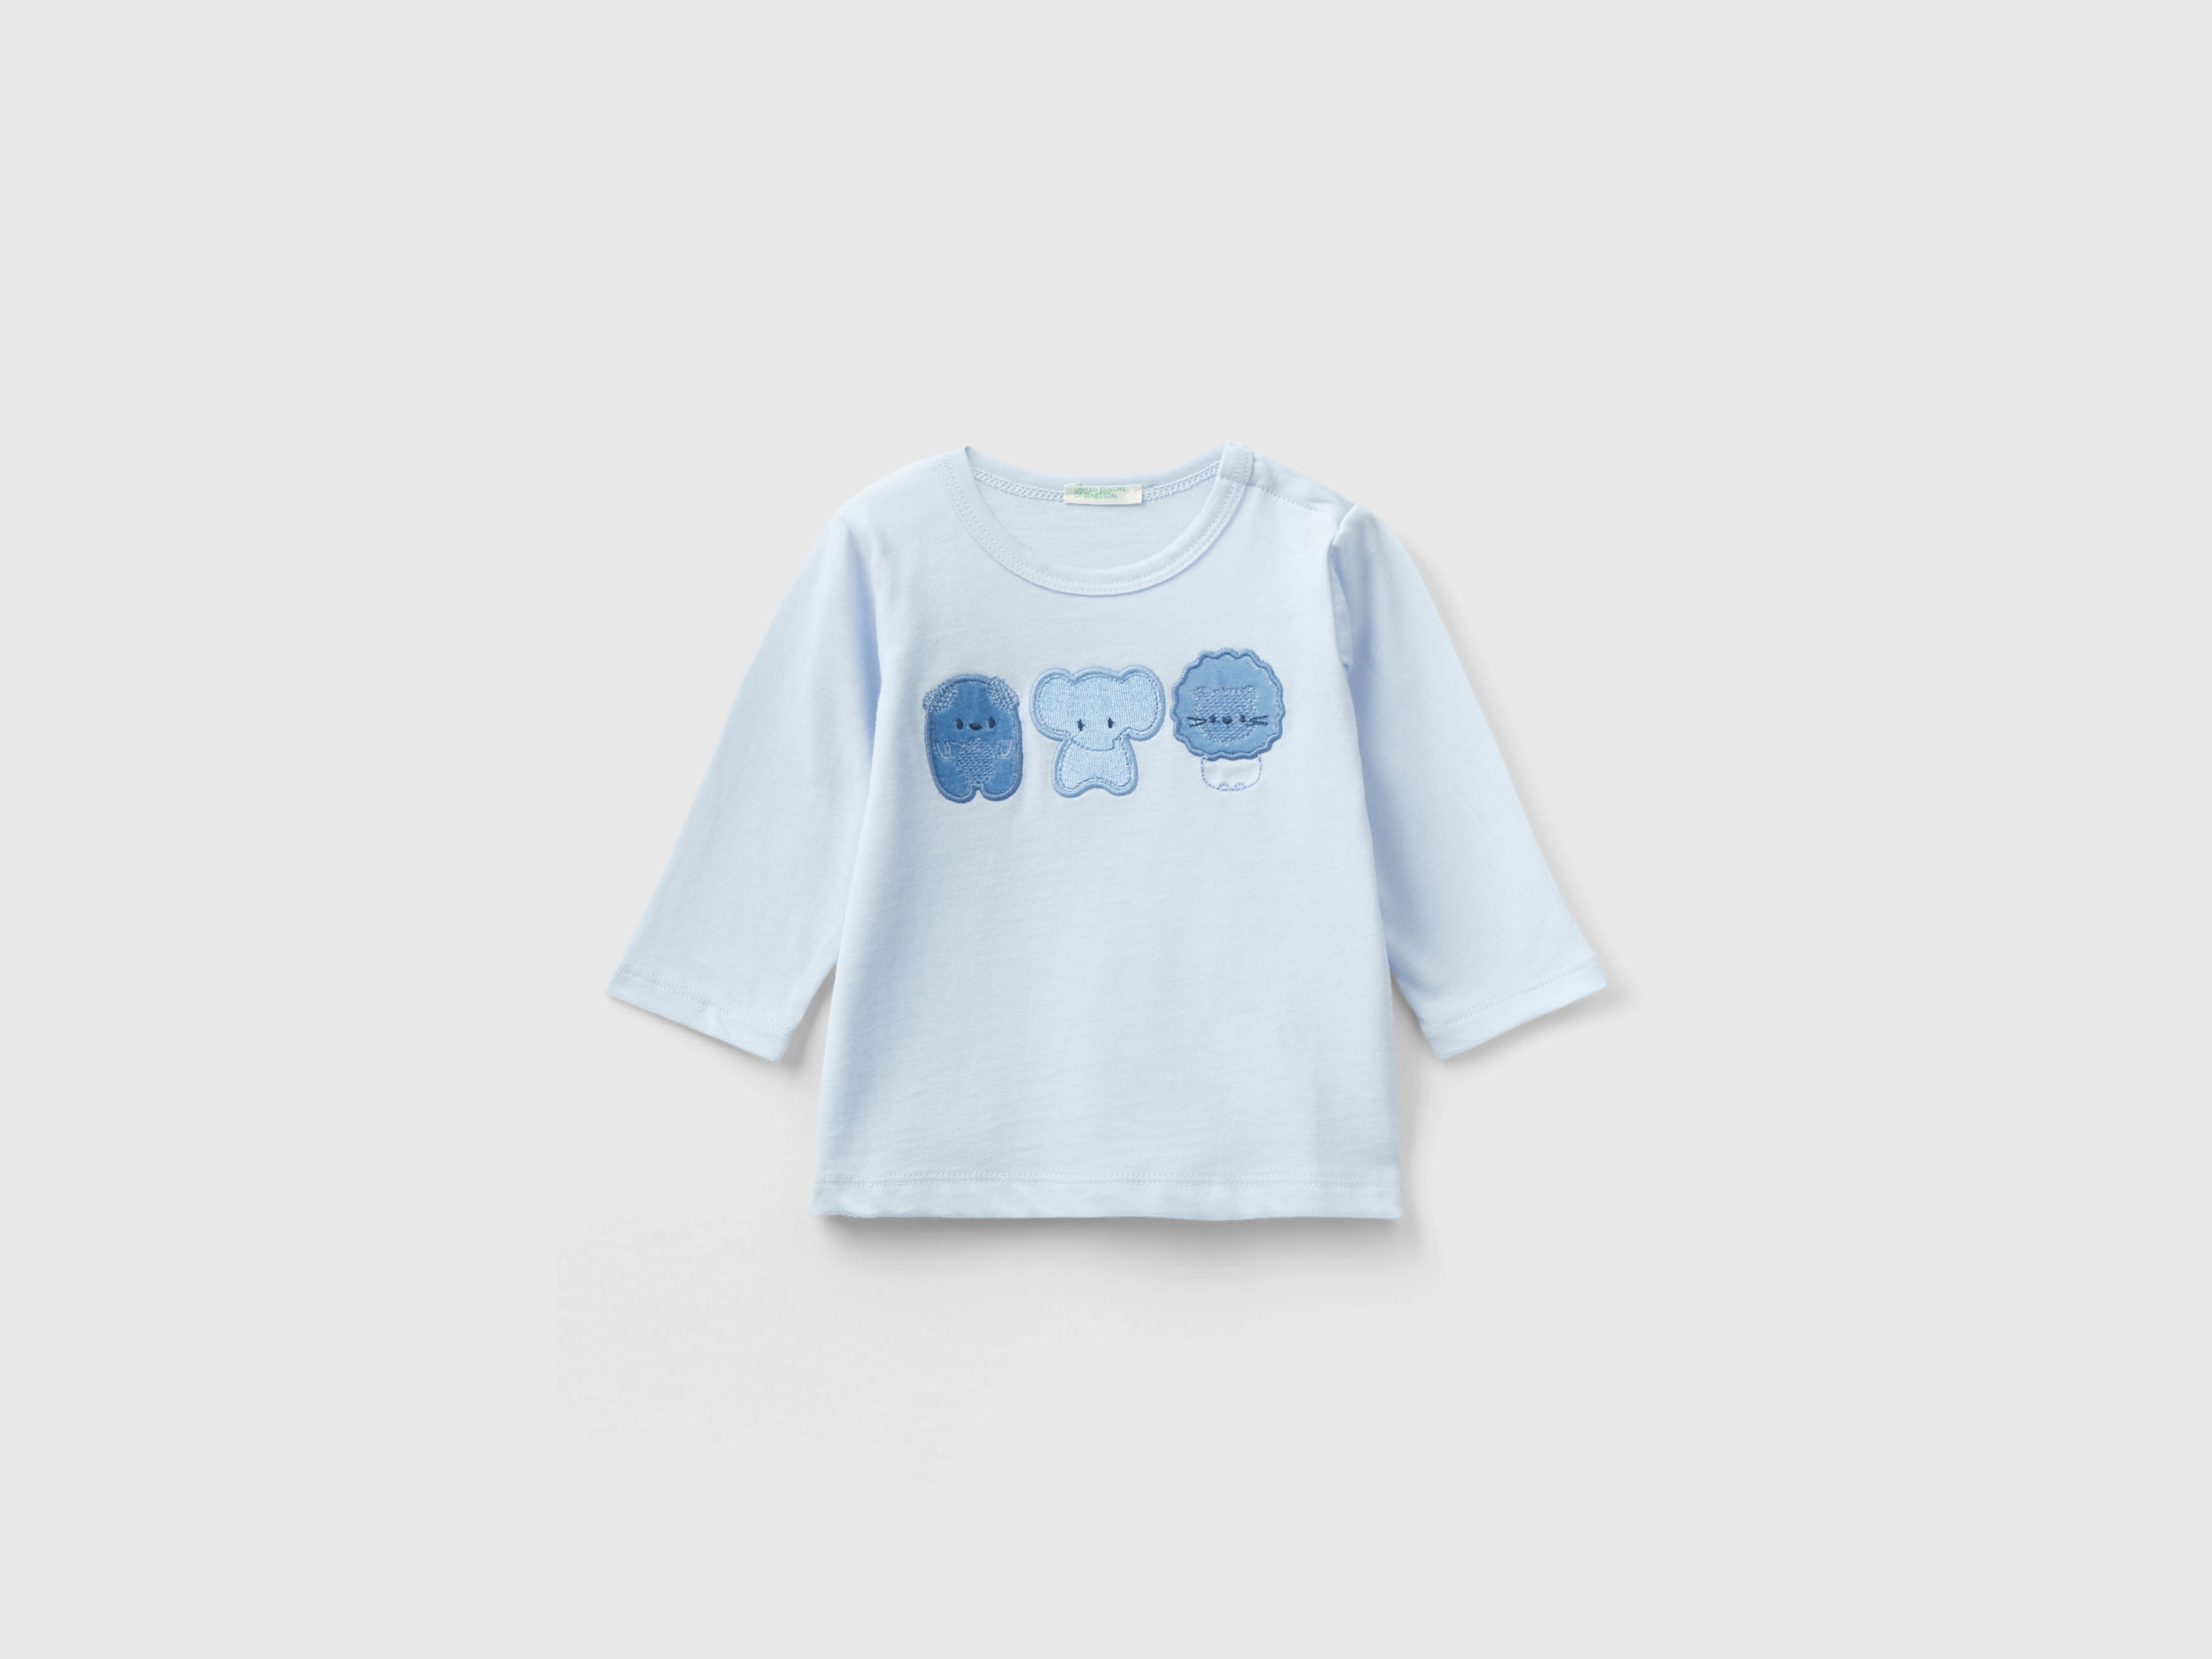 Benetton, T-shirt With Animal Print, size 1-3, Sky Blue, Kids